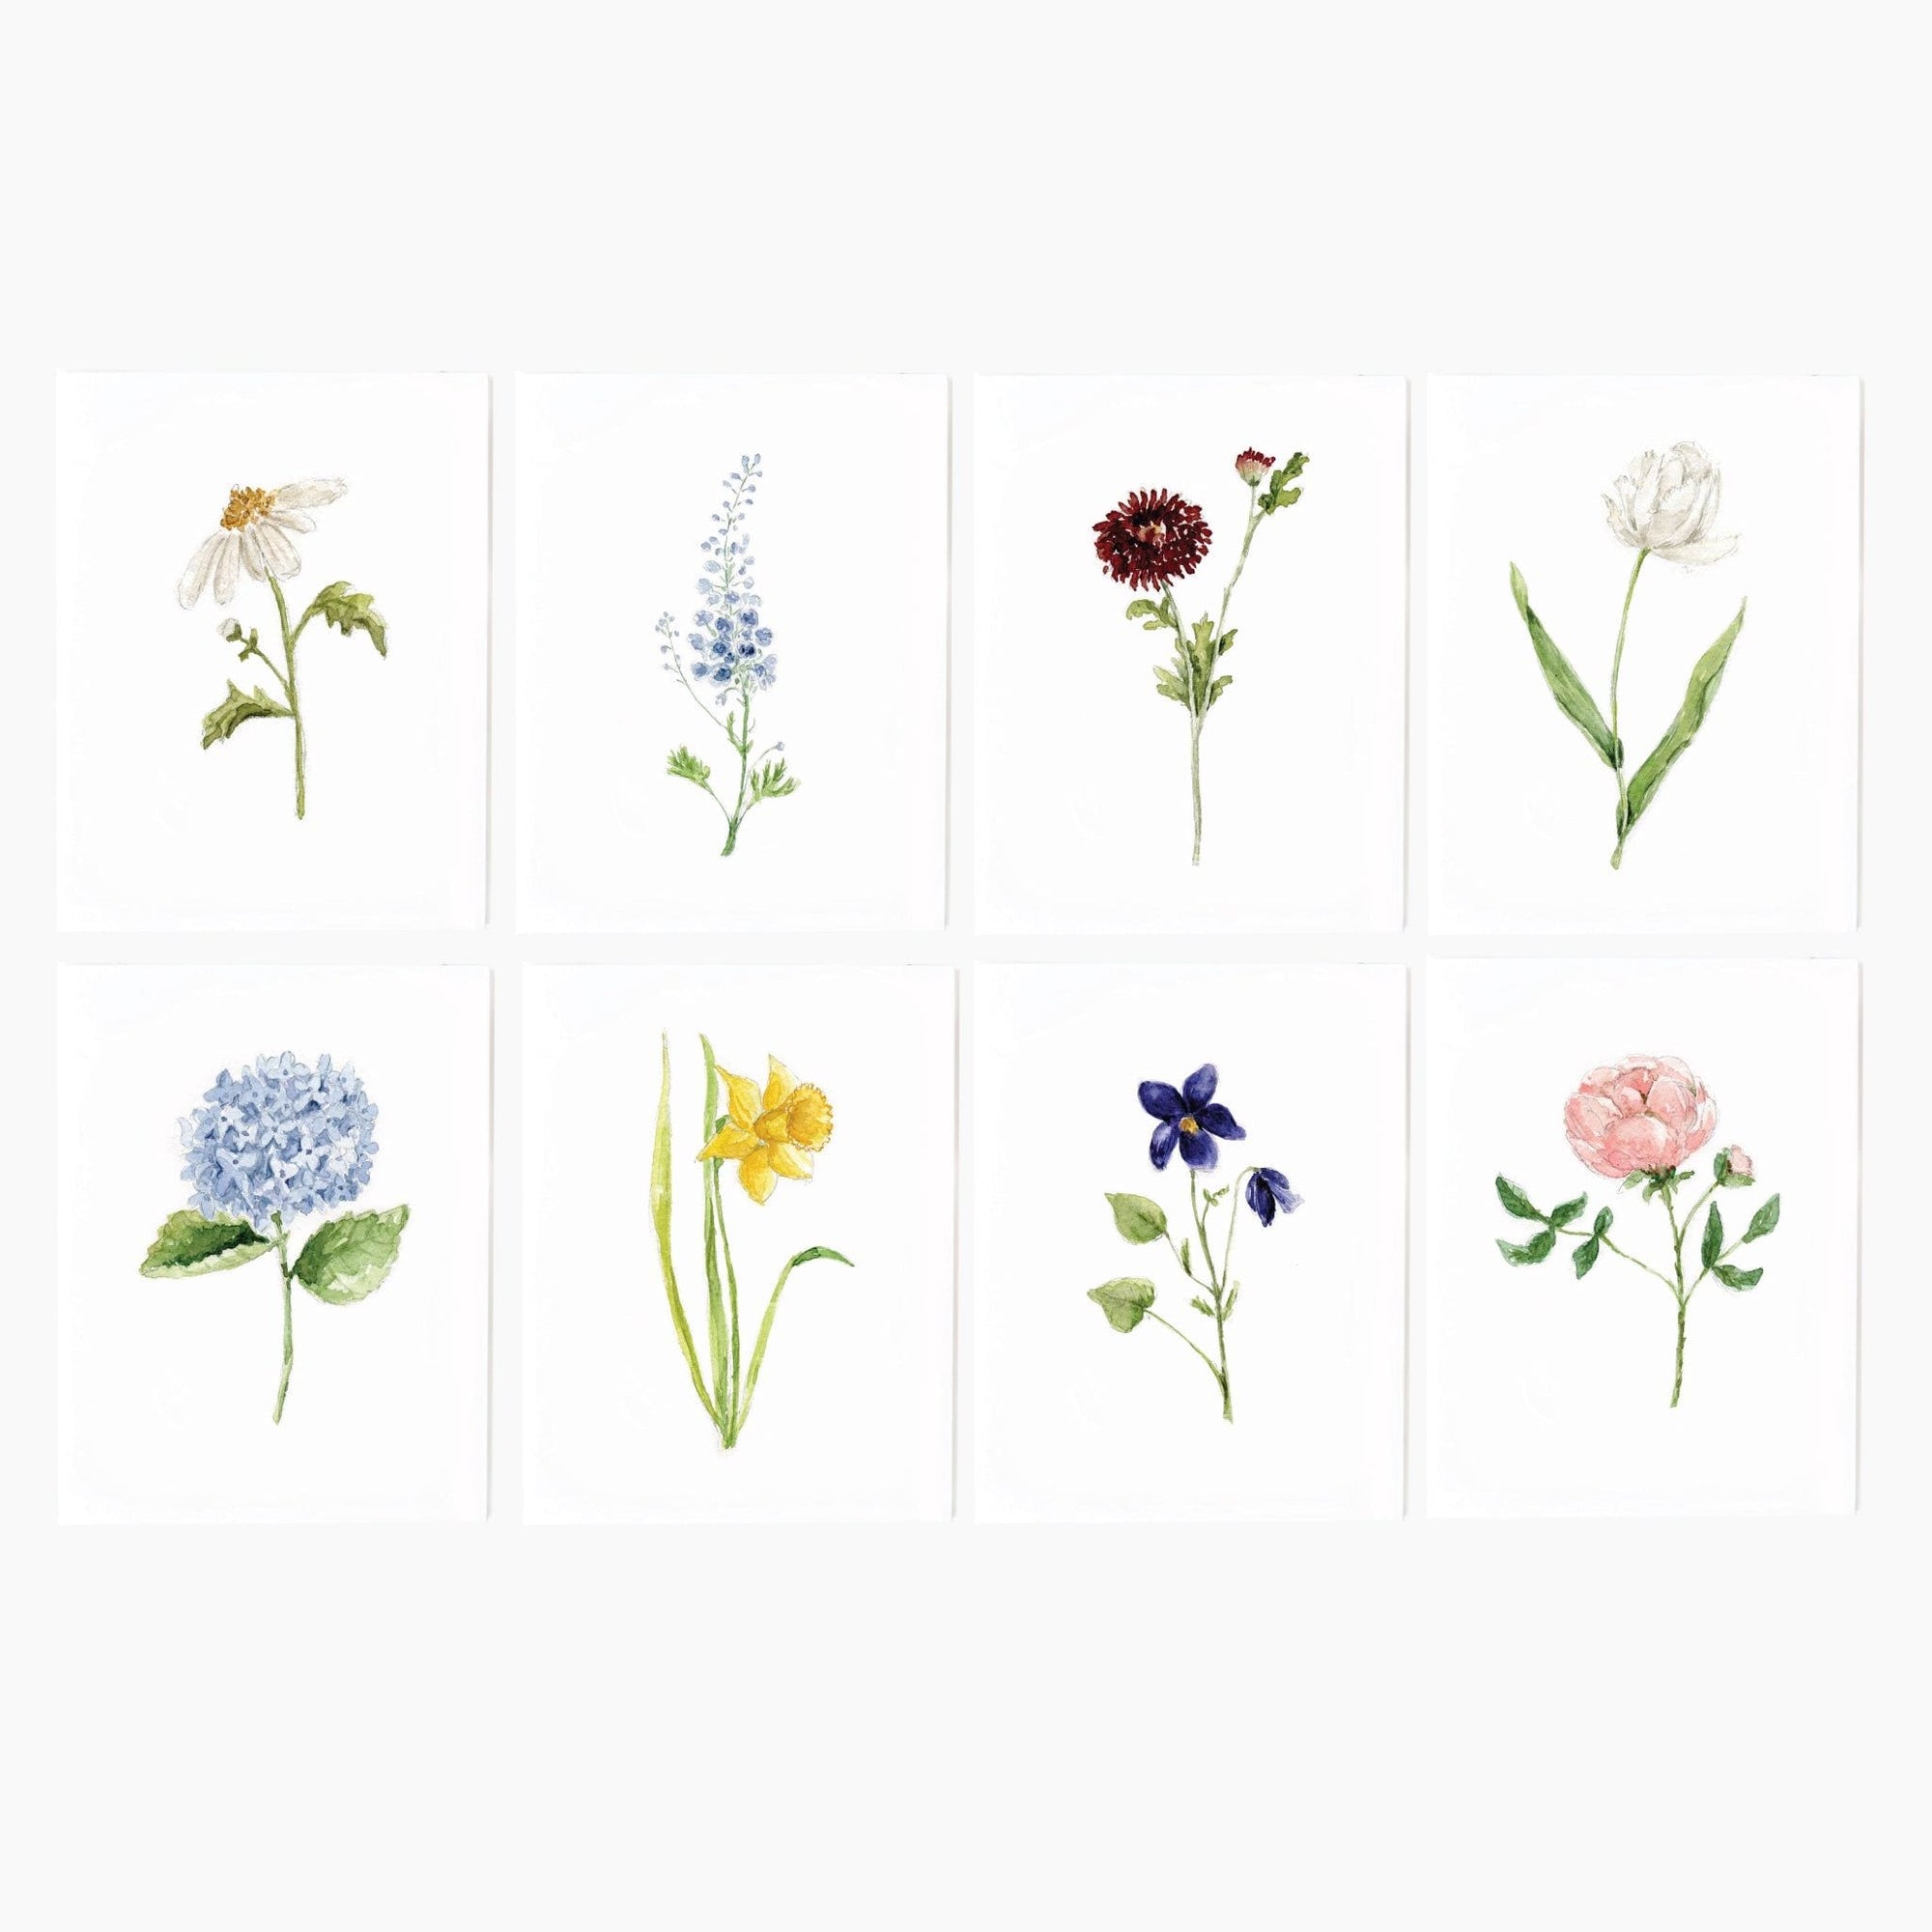 assorted garden flowers notecard set - emily lex studio